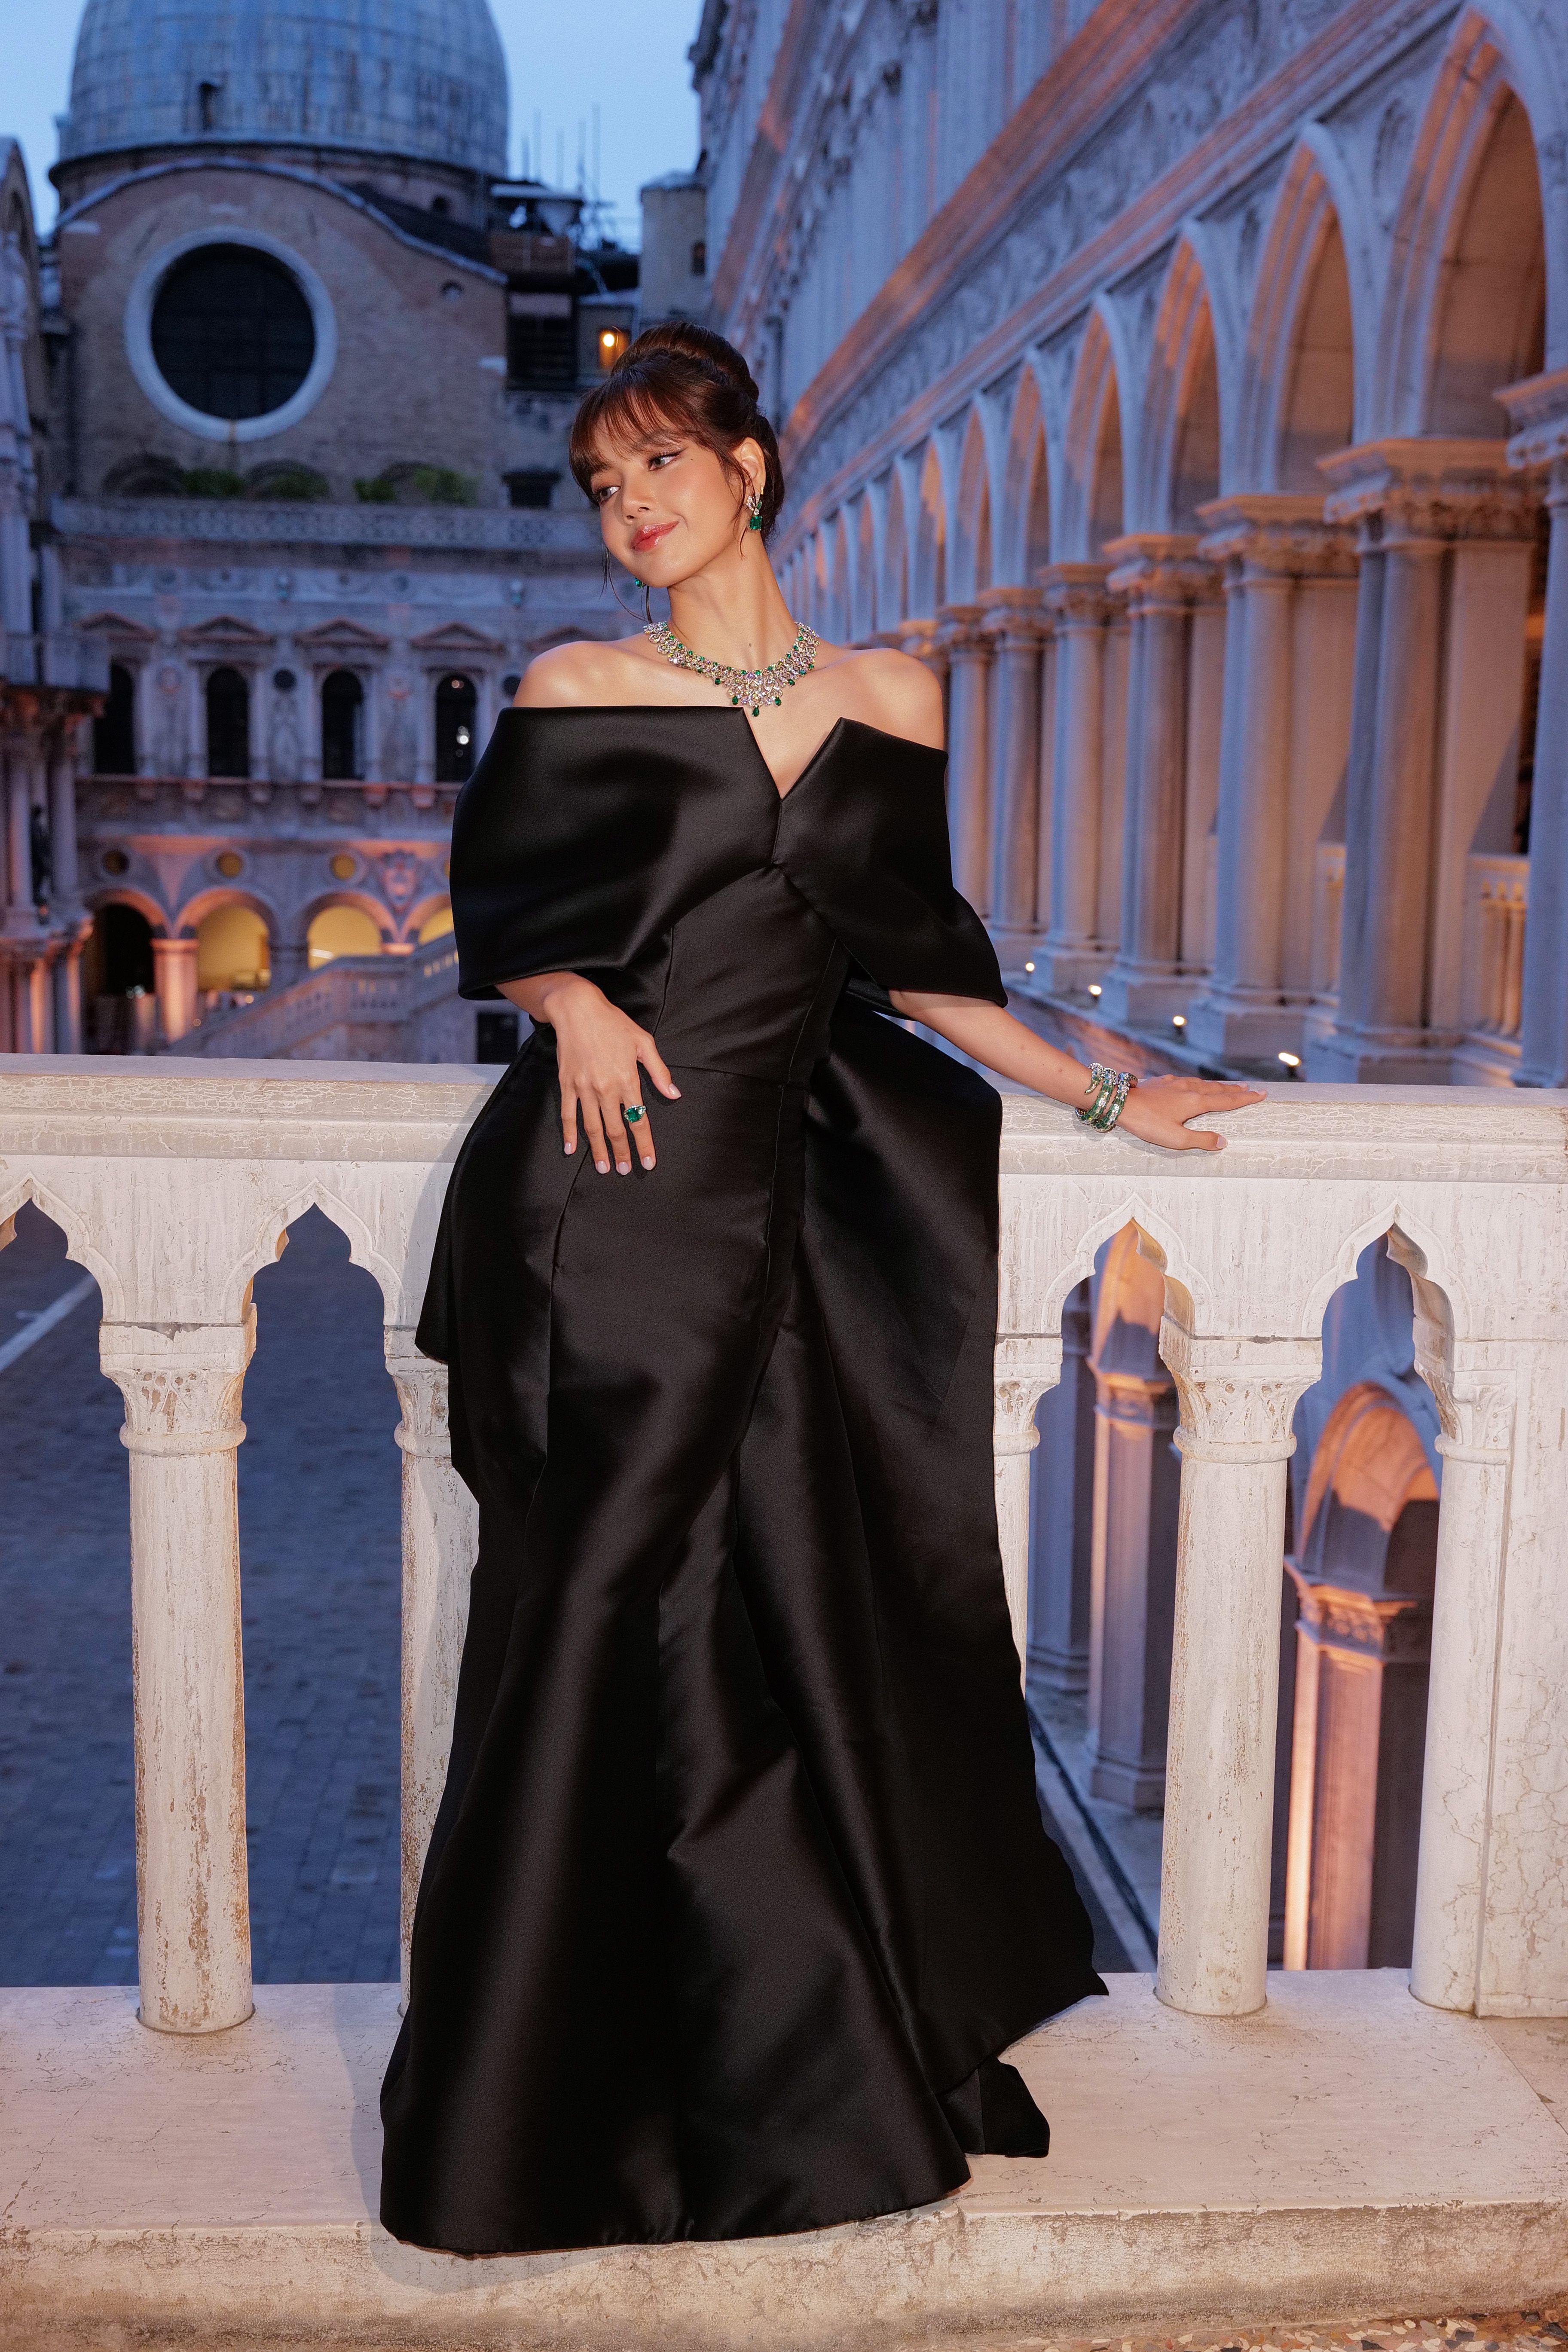 Blackpink's Lisa Epitomizes Elegance in an Off-the-Shoulder Gown